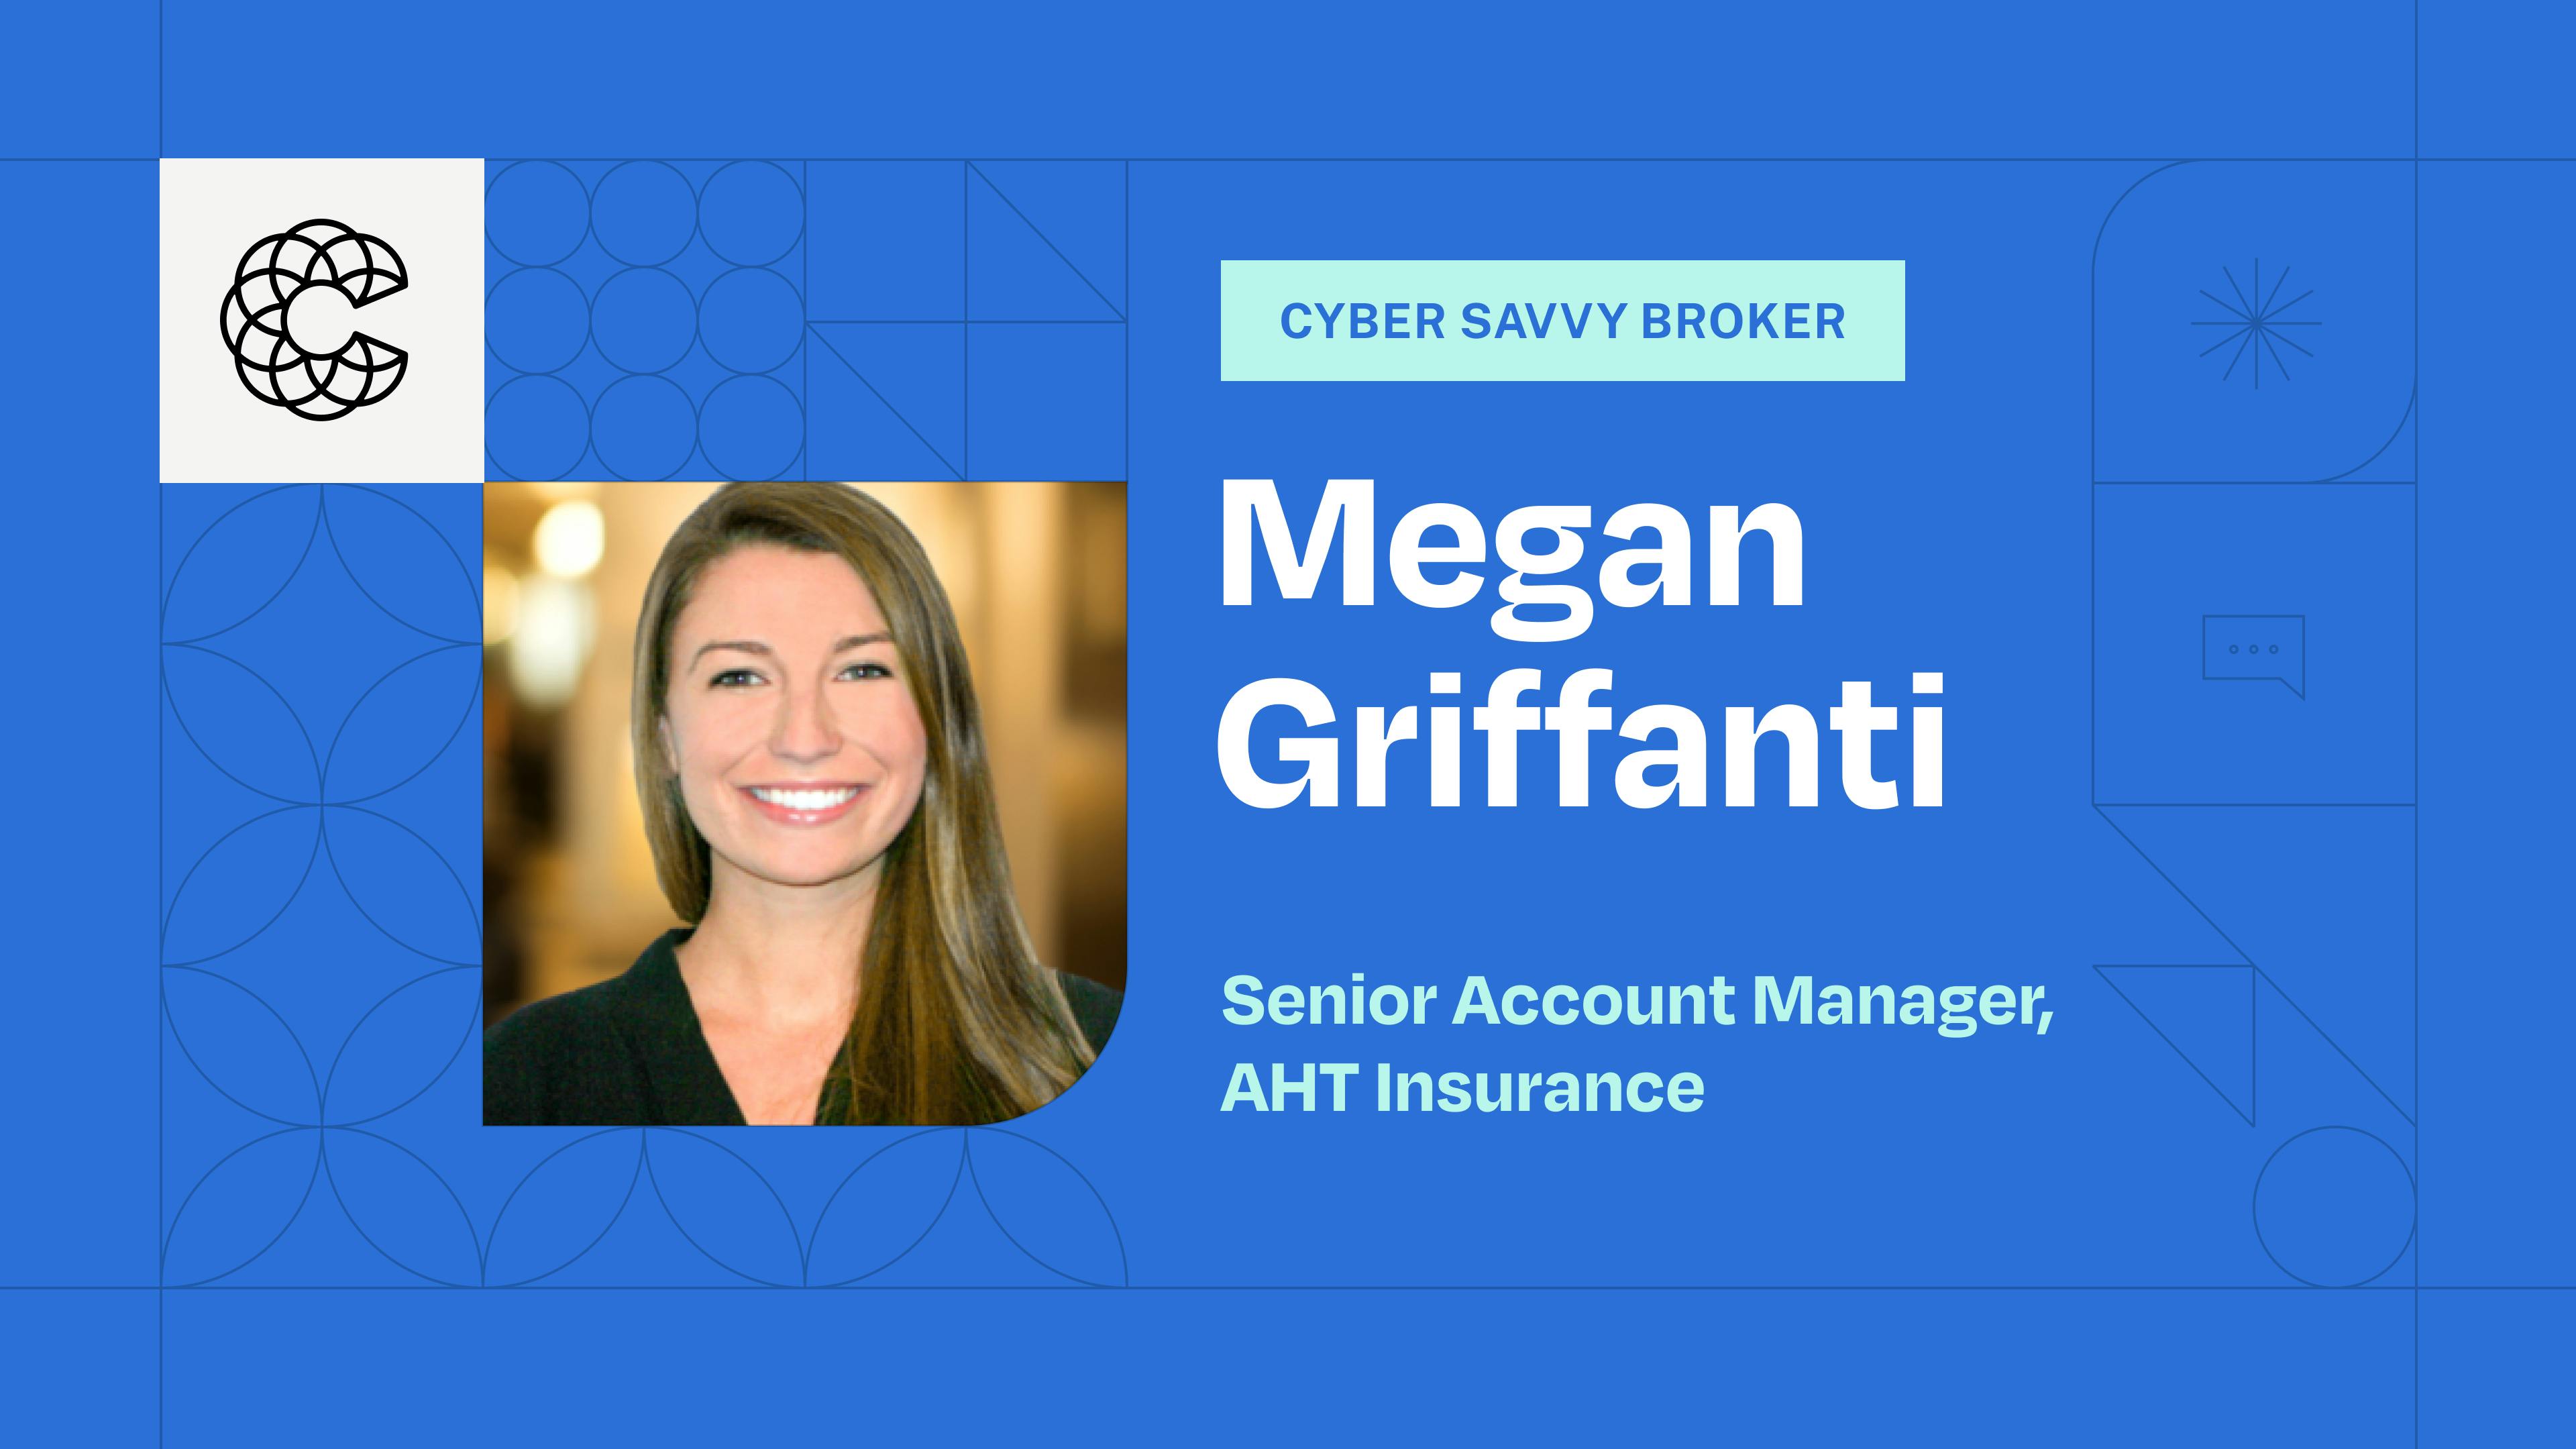 Cyber savvy broker: Megan Griffanti